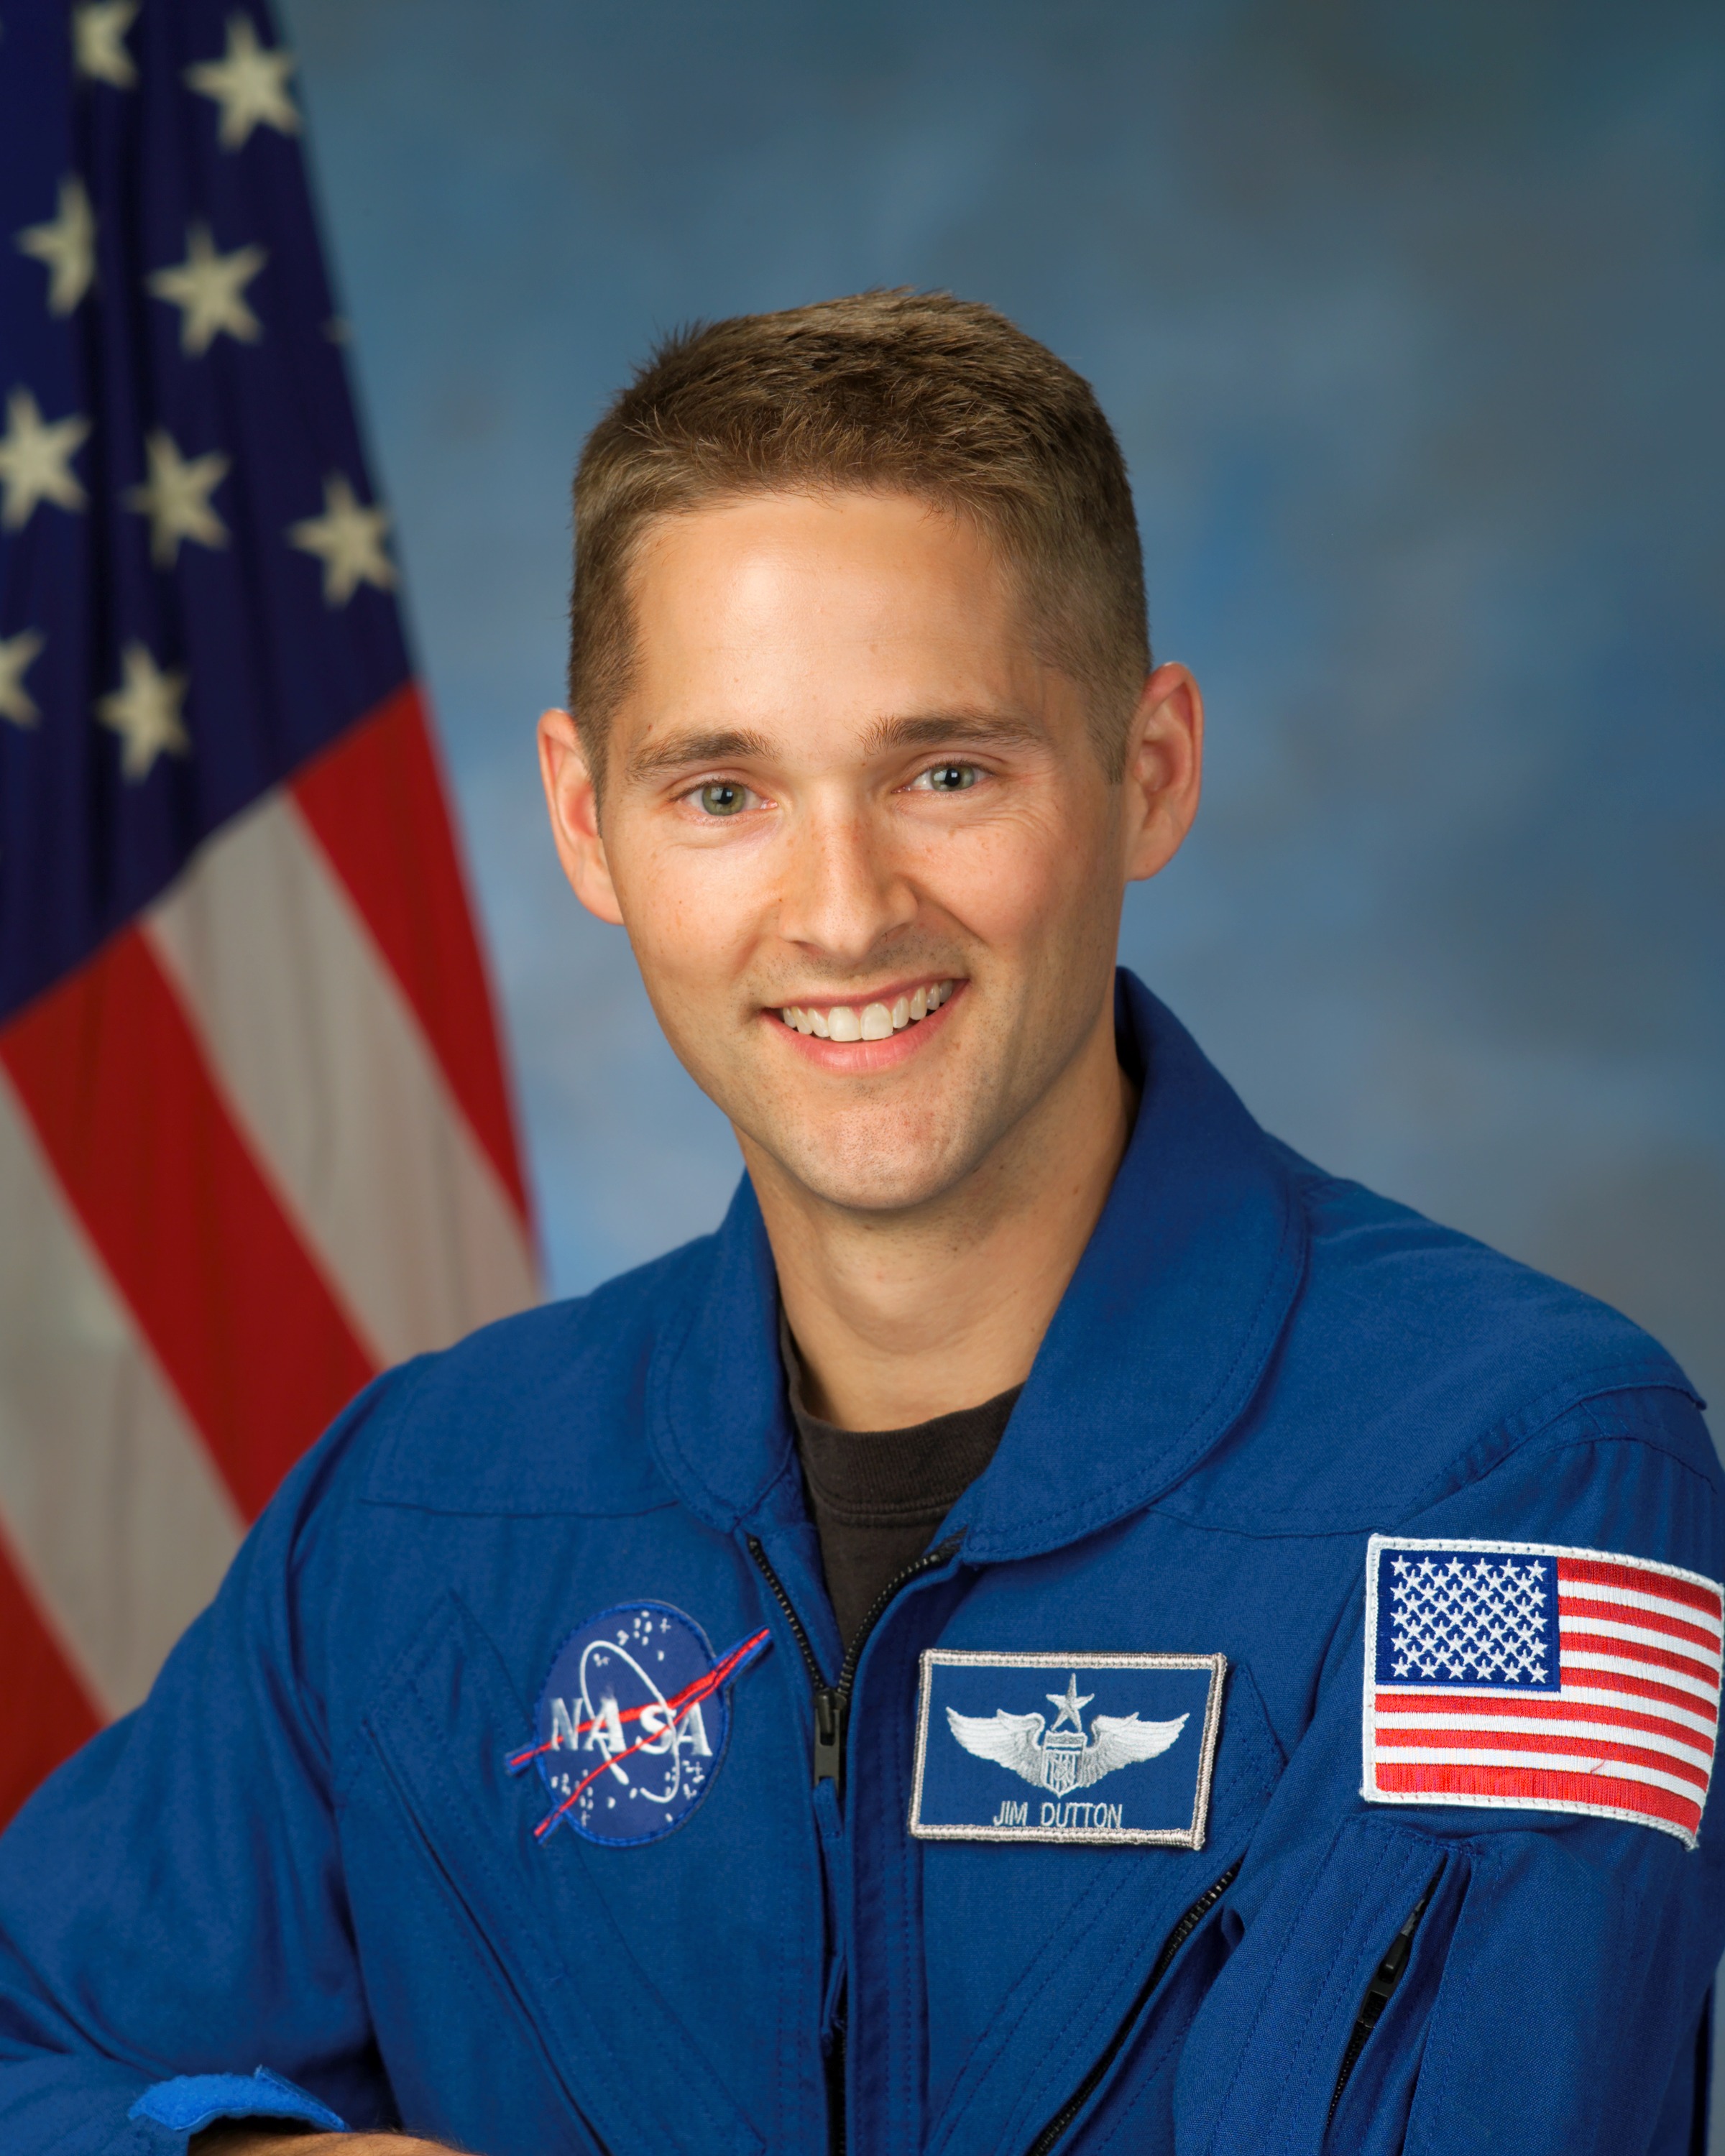 Group 19 NASA astronaut James P. Dutton